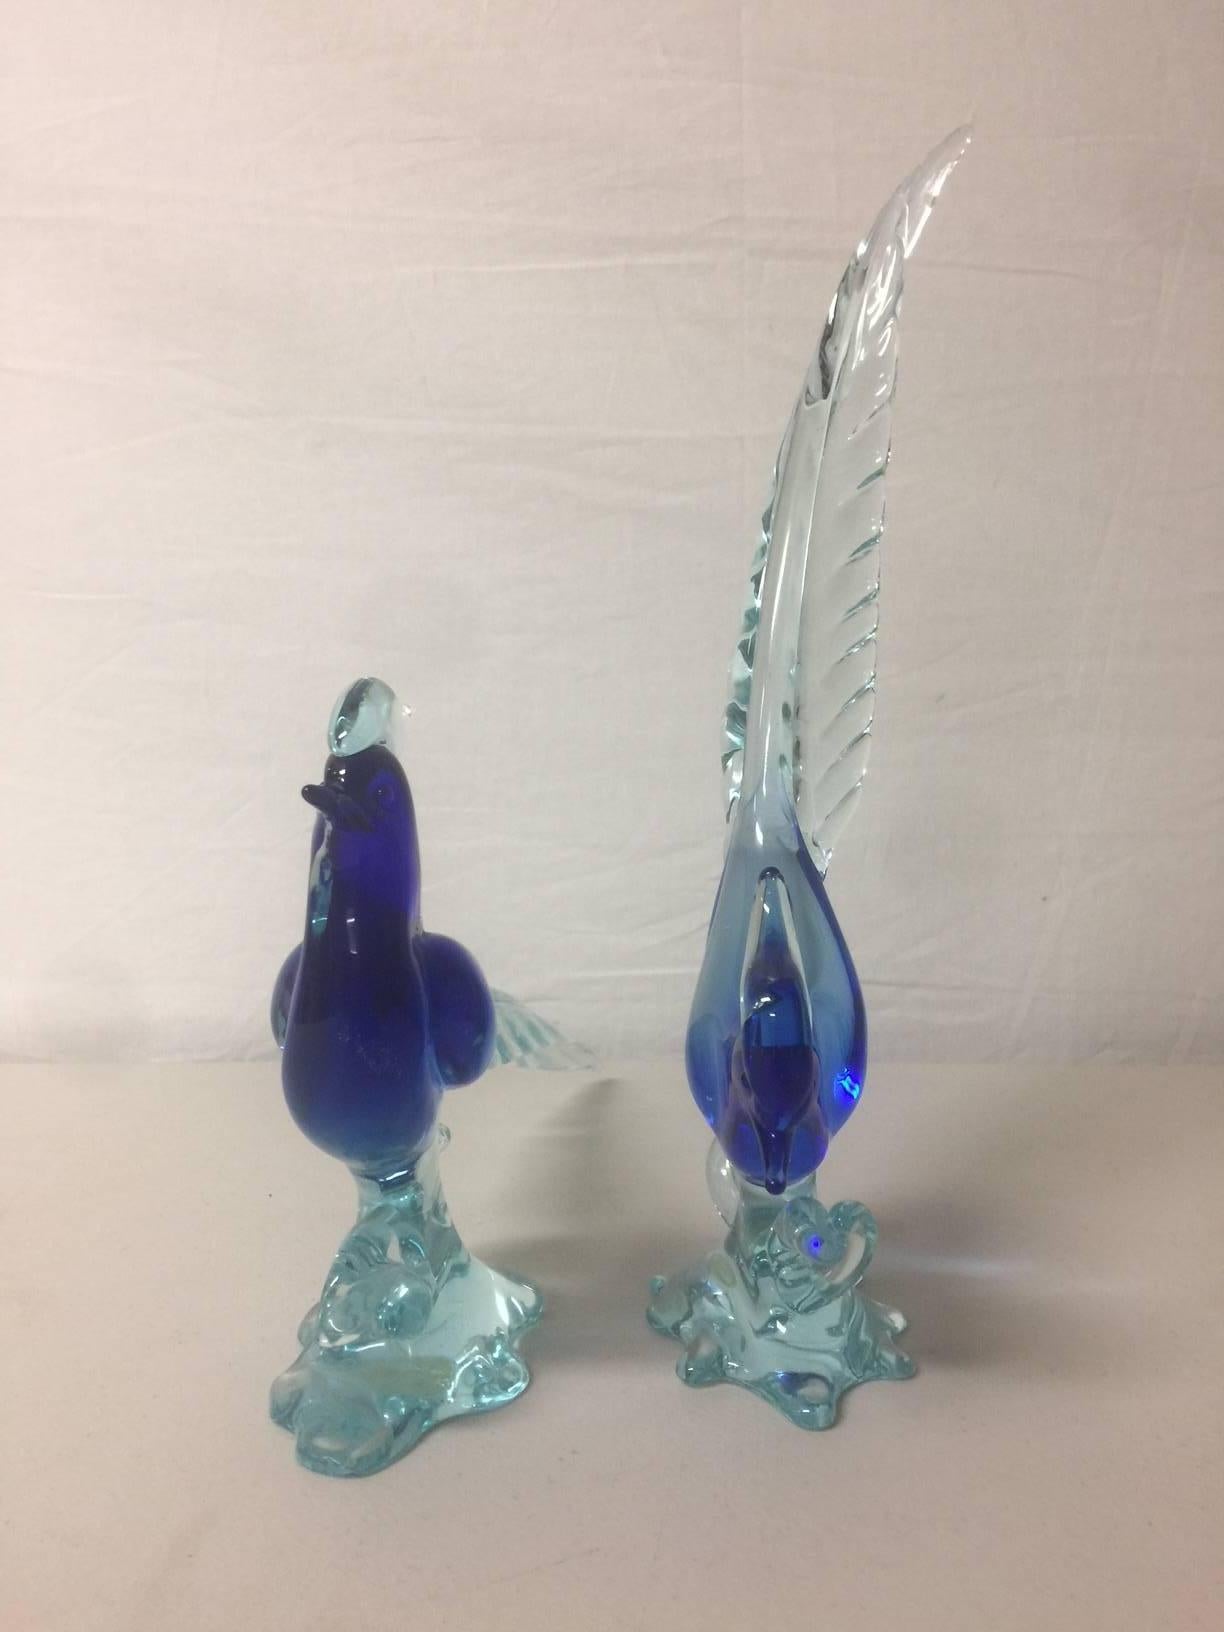 Italian Pair of Sommerso Art Glass Birds/Pheasants by Murano Glass Studios